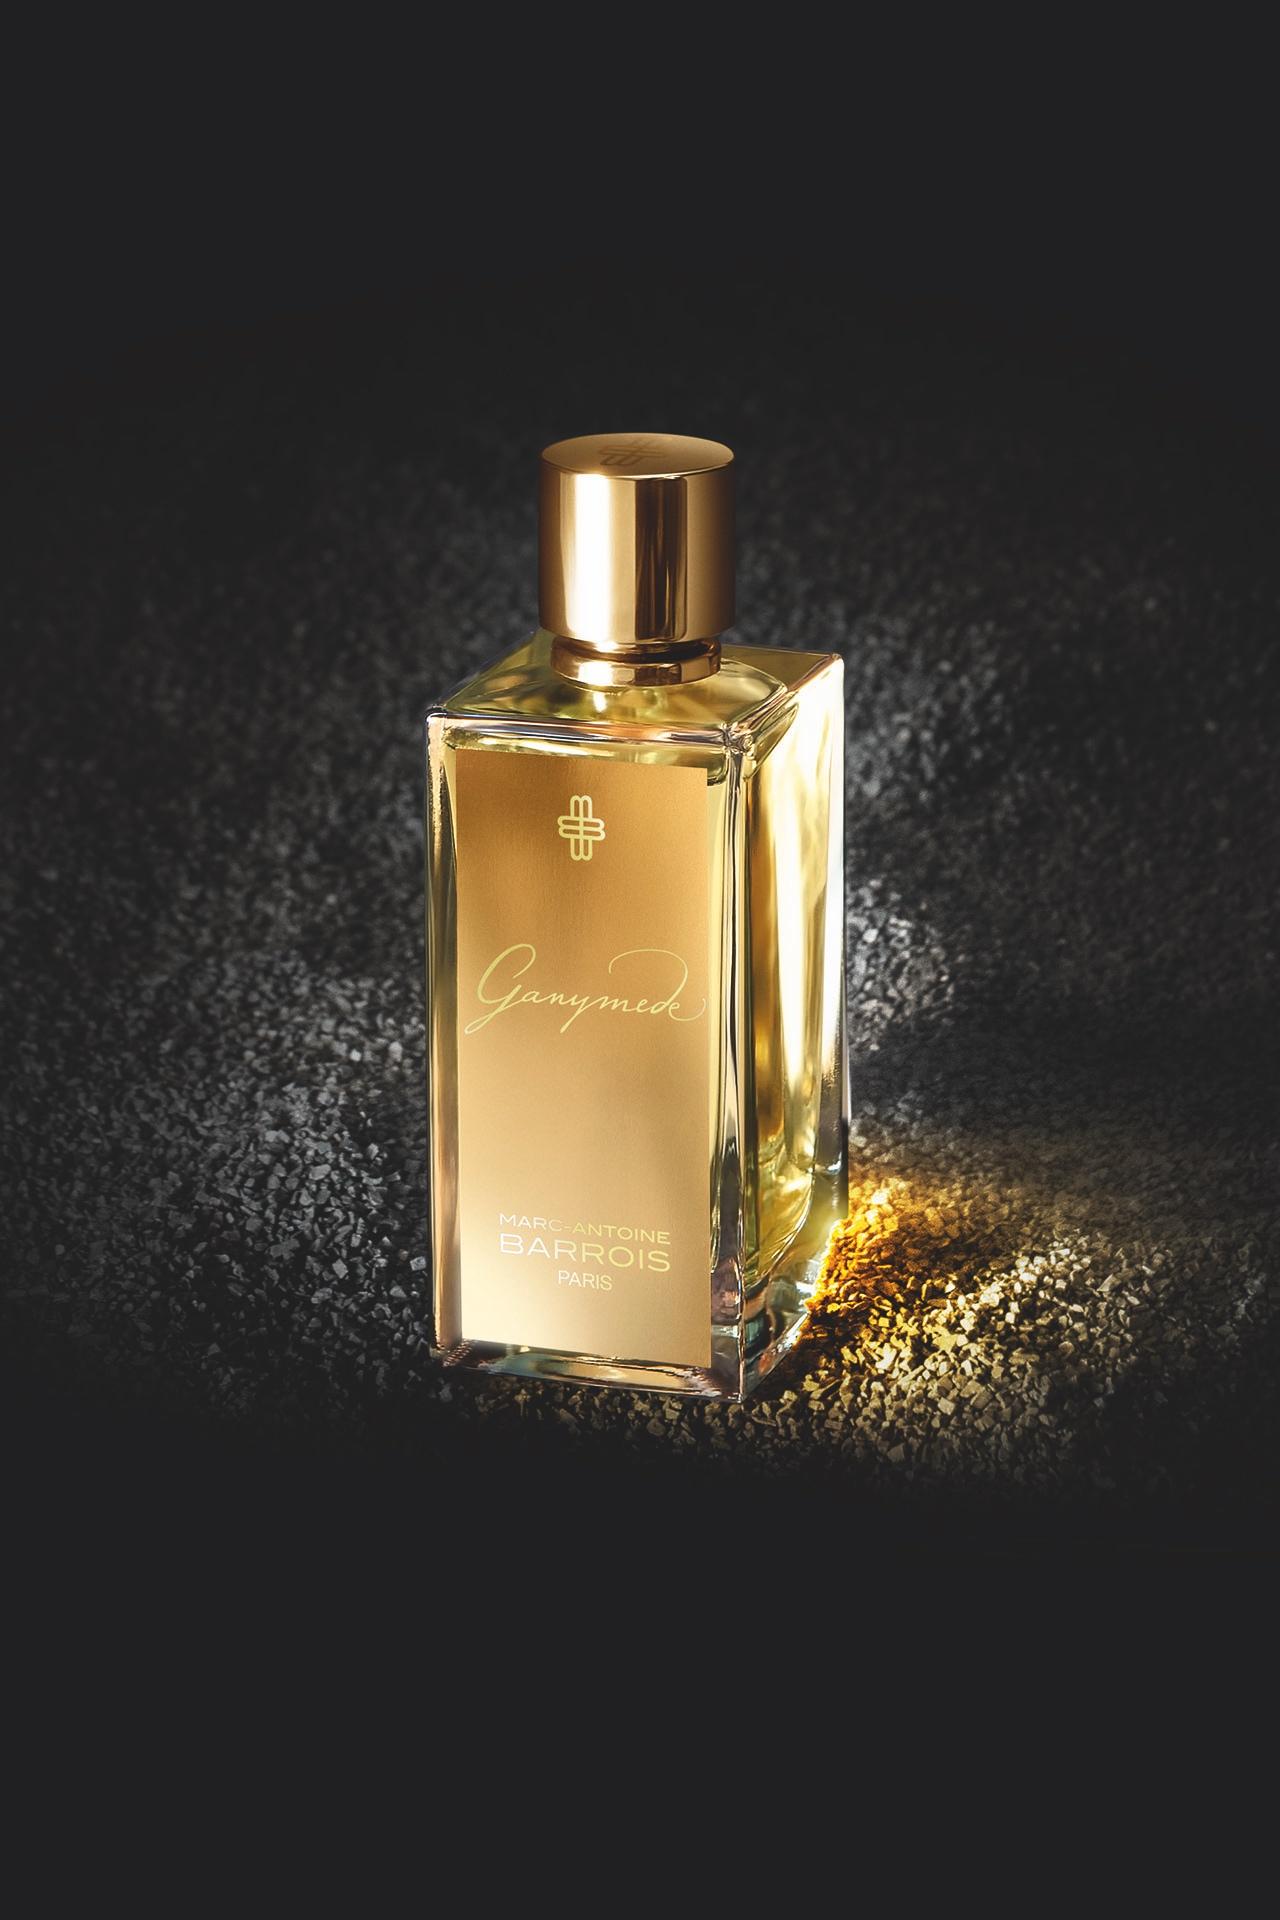 Marc-Antoine Barrois - Ganymede eau de parfum 100 ml ambiance | Perfume Lounge